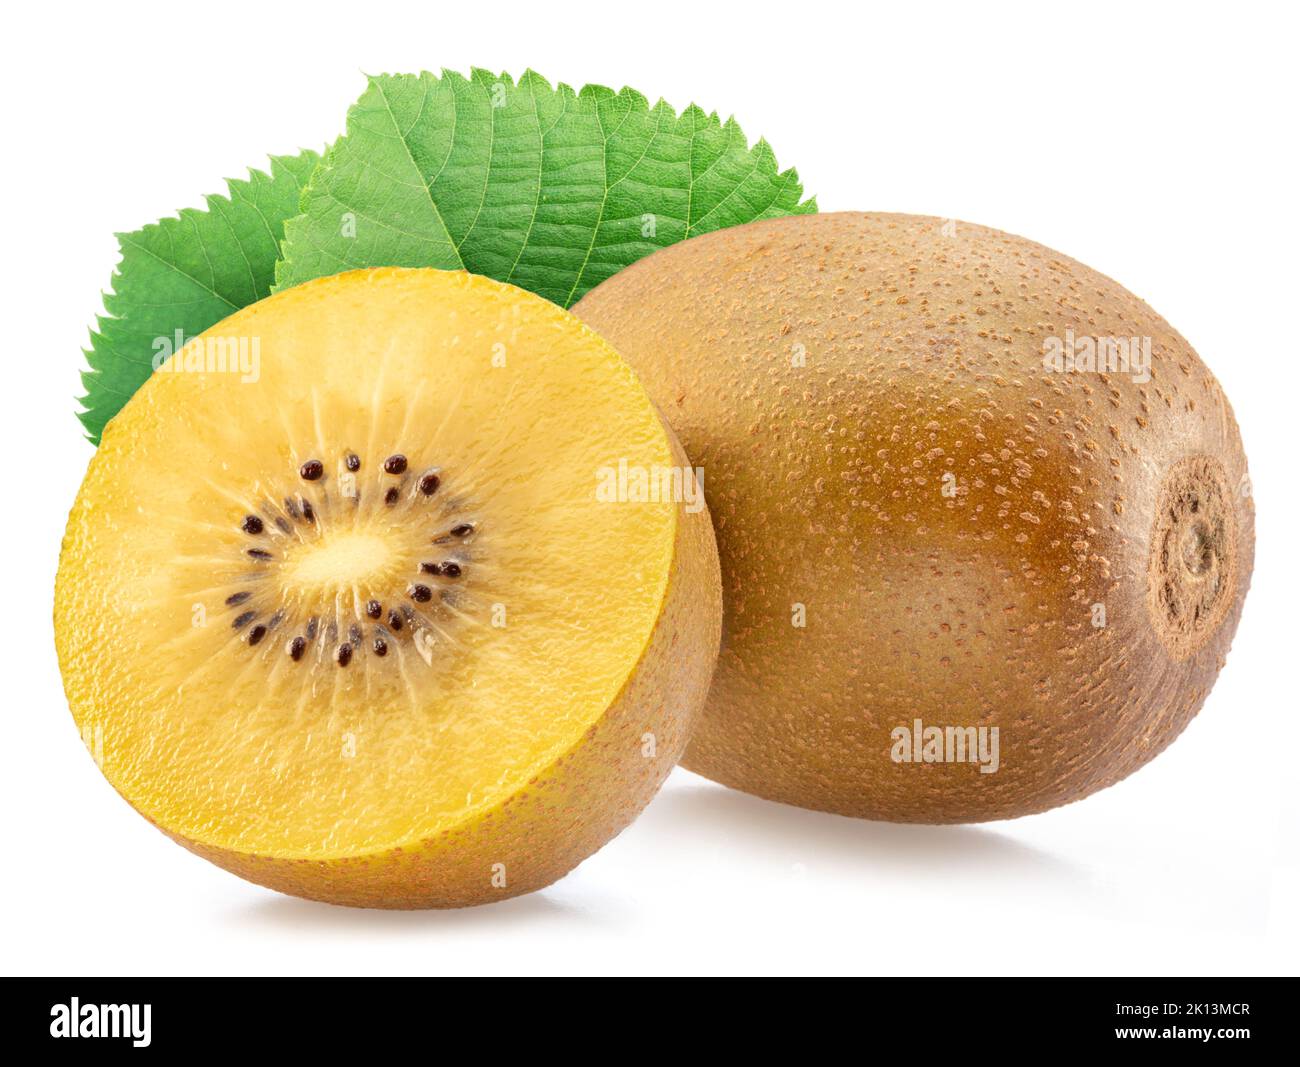 Golden kiwi fruits with leaves isolated on white background. Stock Photo